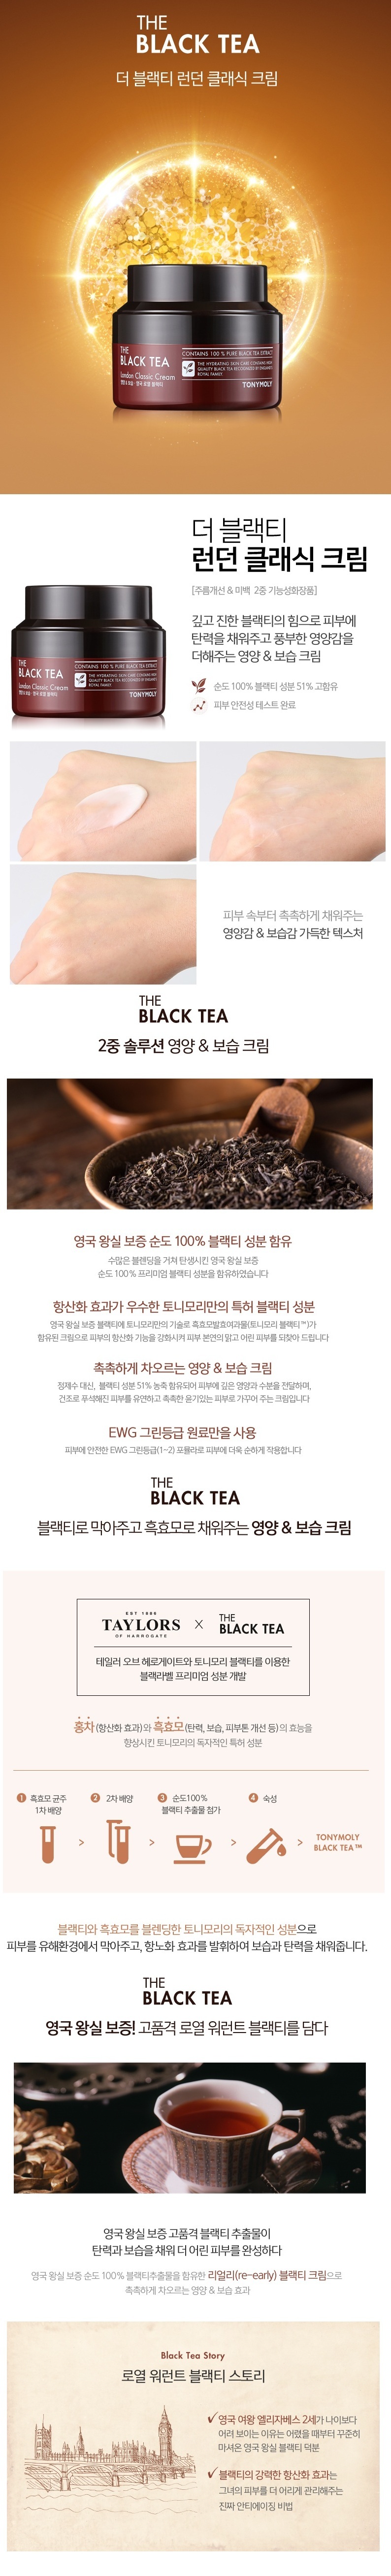 Tony Moly The Black Tea Skin Care 3 Set korean cosmetic skincare product online shop malaysia italy germany4